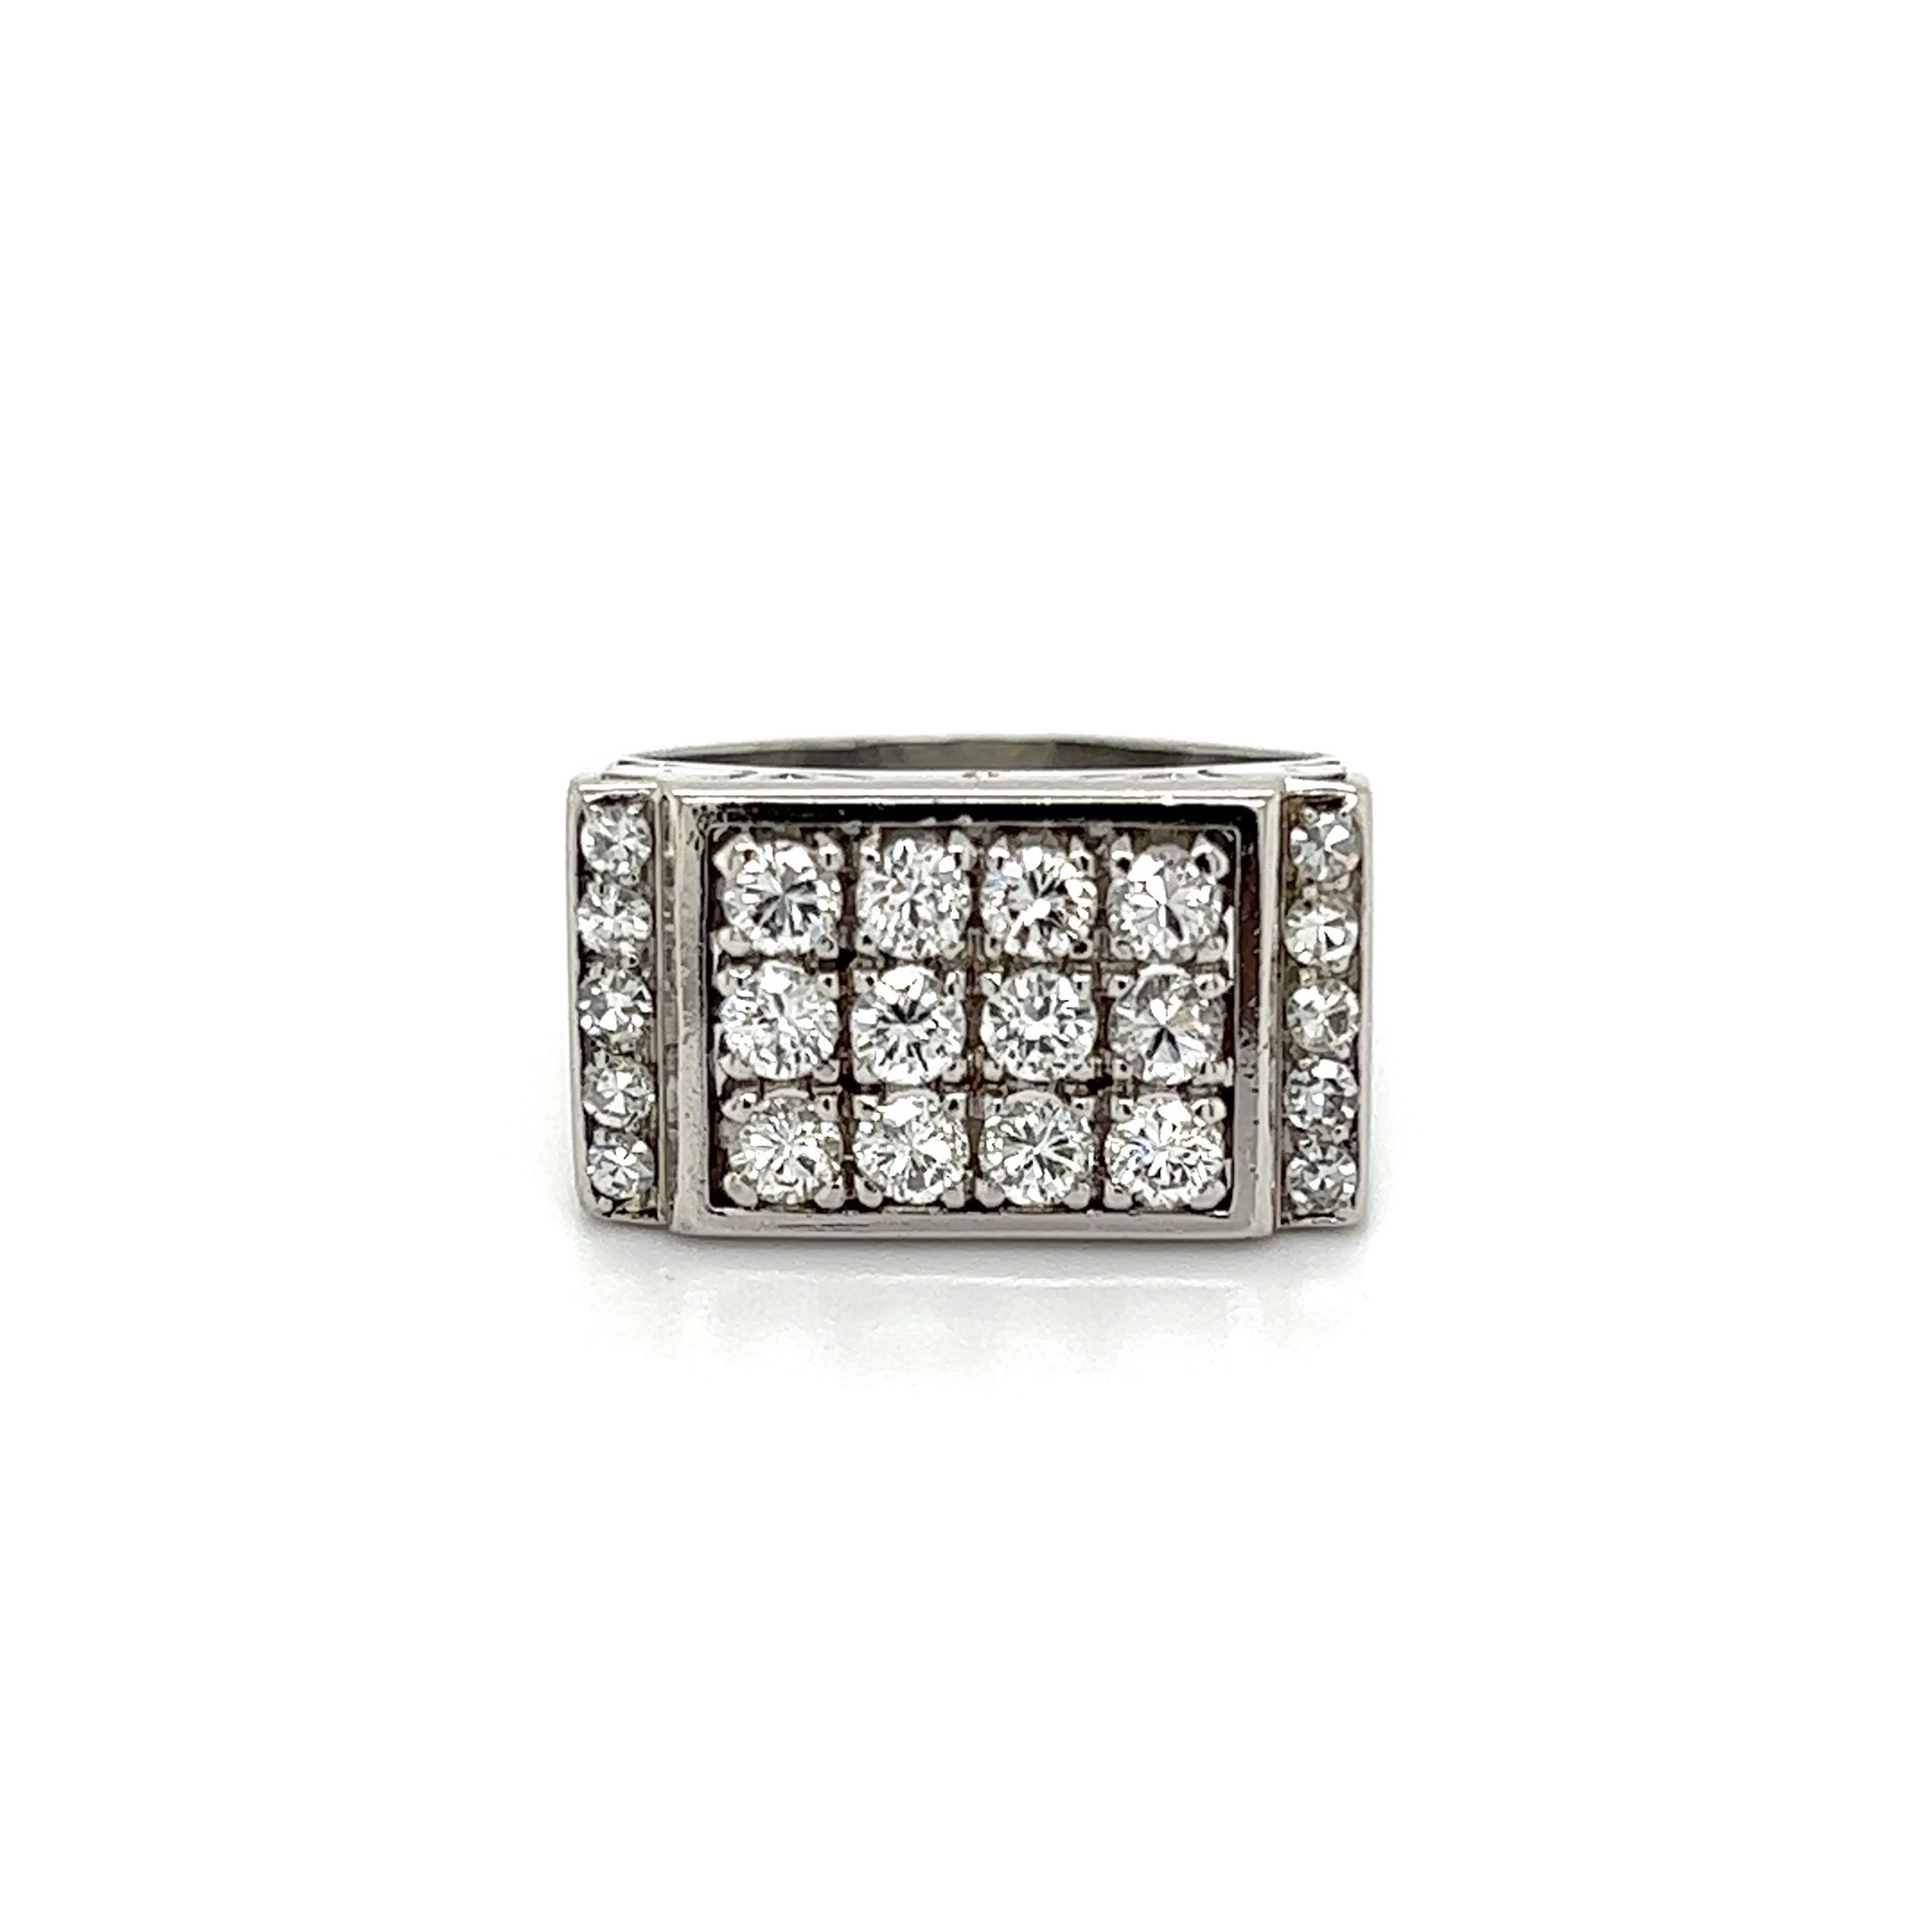 Platinum 1950's Mid Century Engraved Block 1.15tcw Diamond Ring 9.7g, s6.75